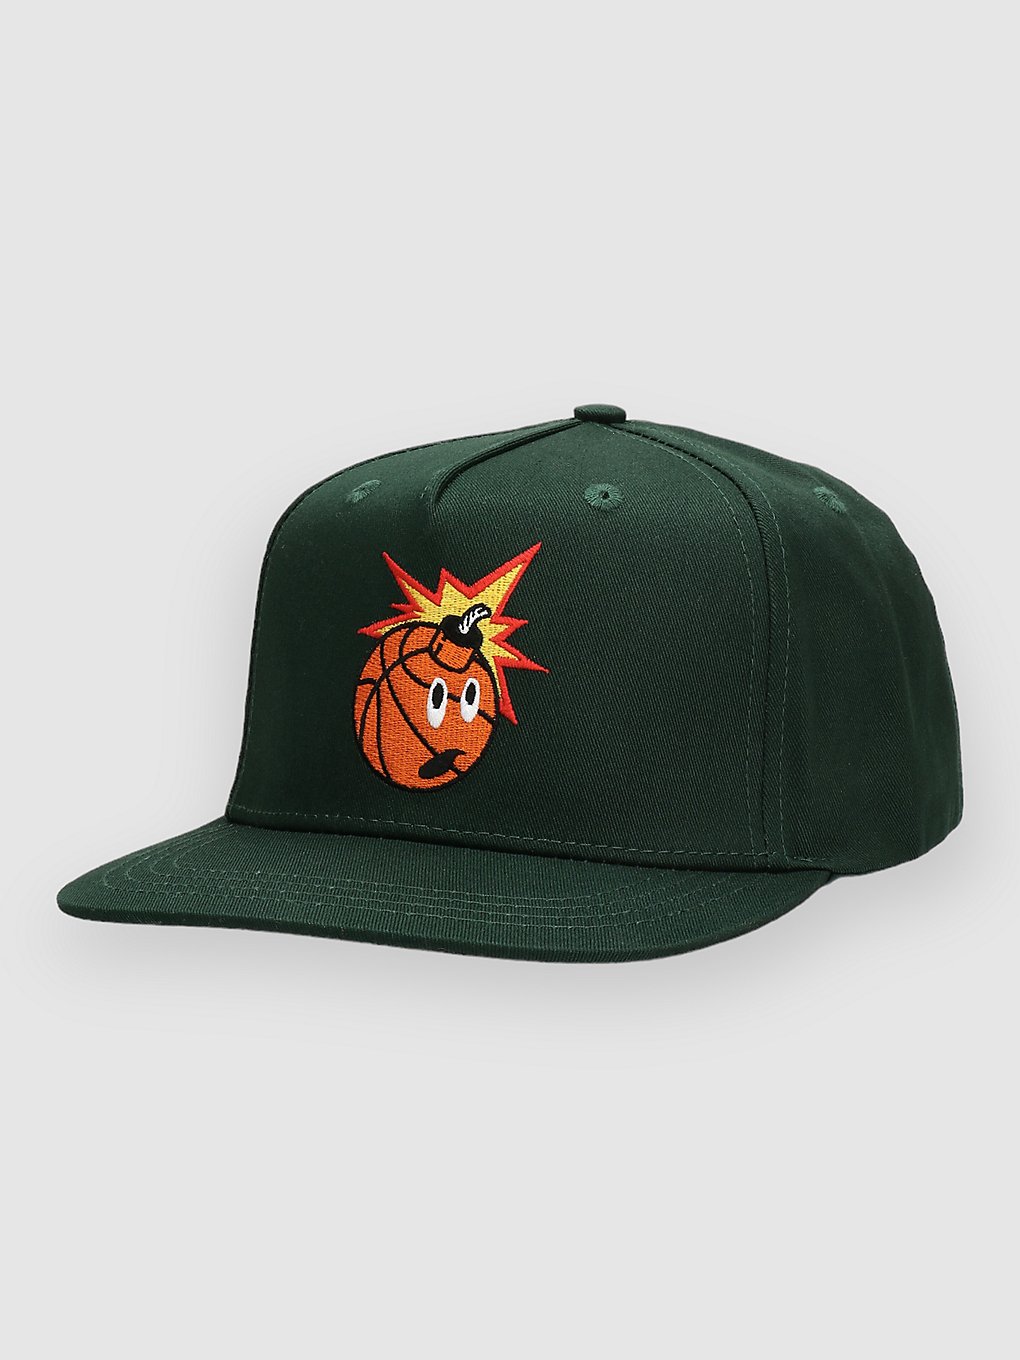 Adam Bomb Basketball Snapback Cap green kaufen